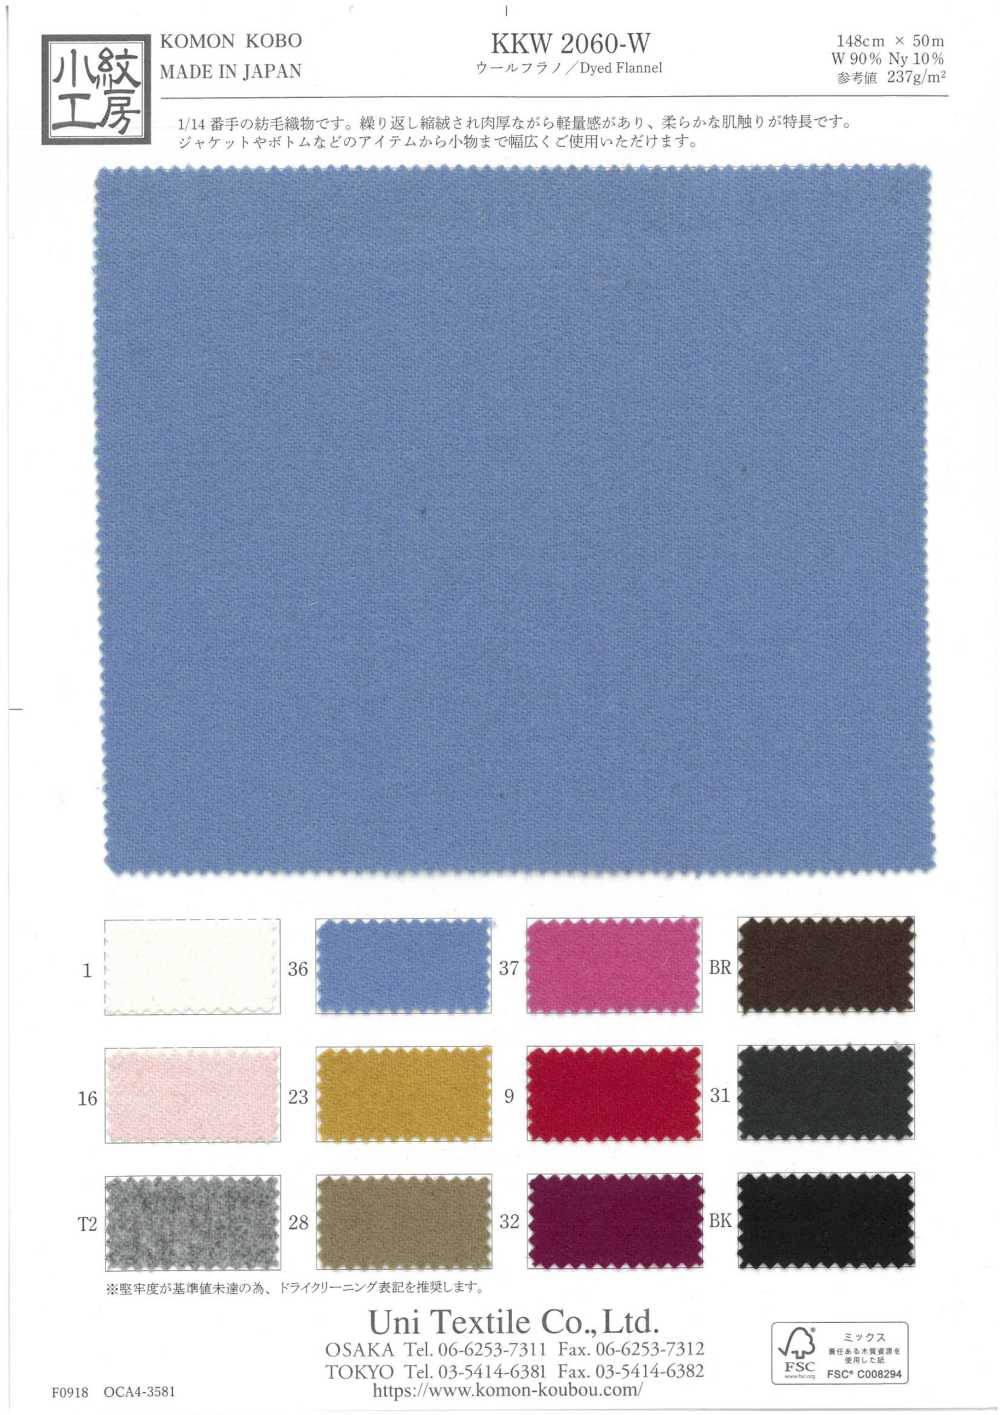 KKW2060-W Vải Vải Dạ Flannel Uni Textile